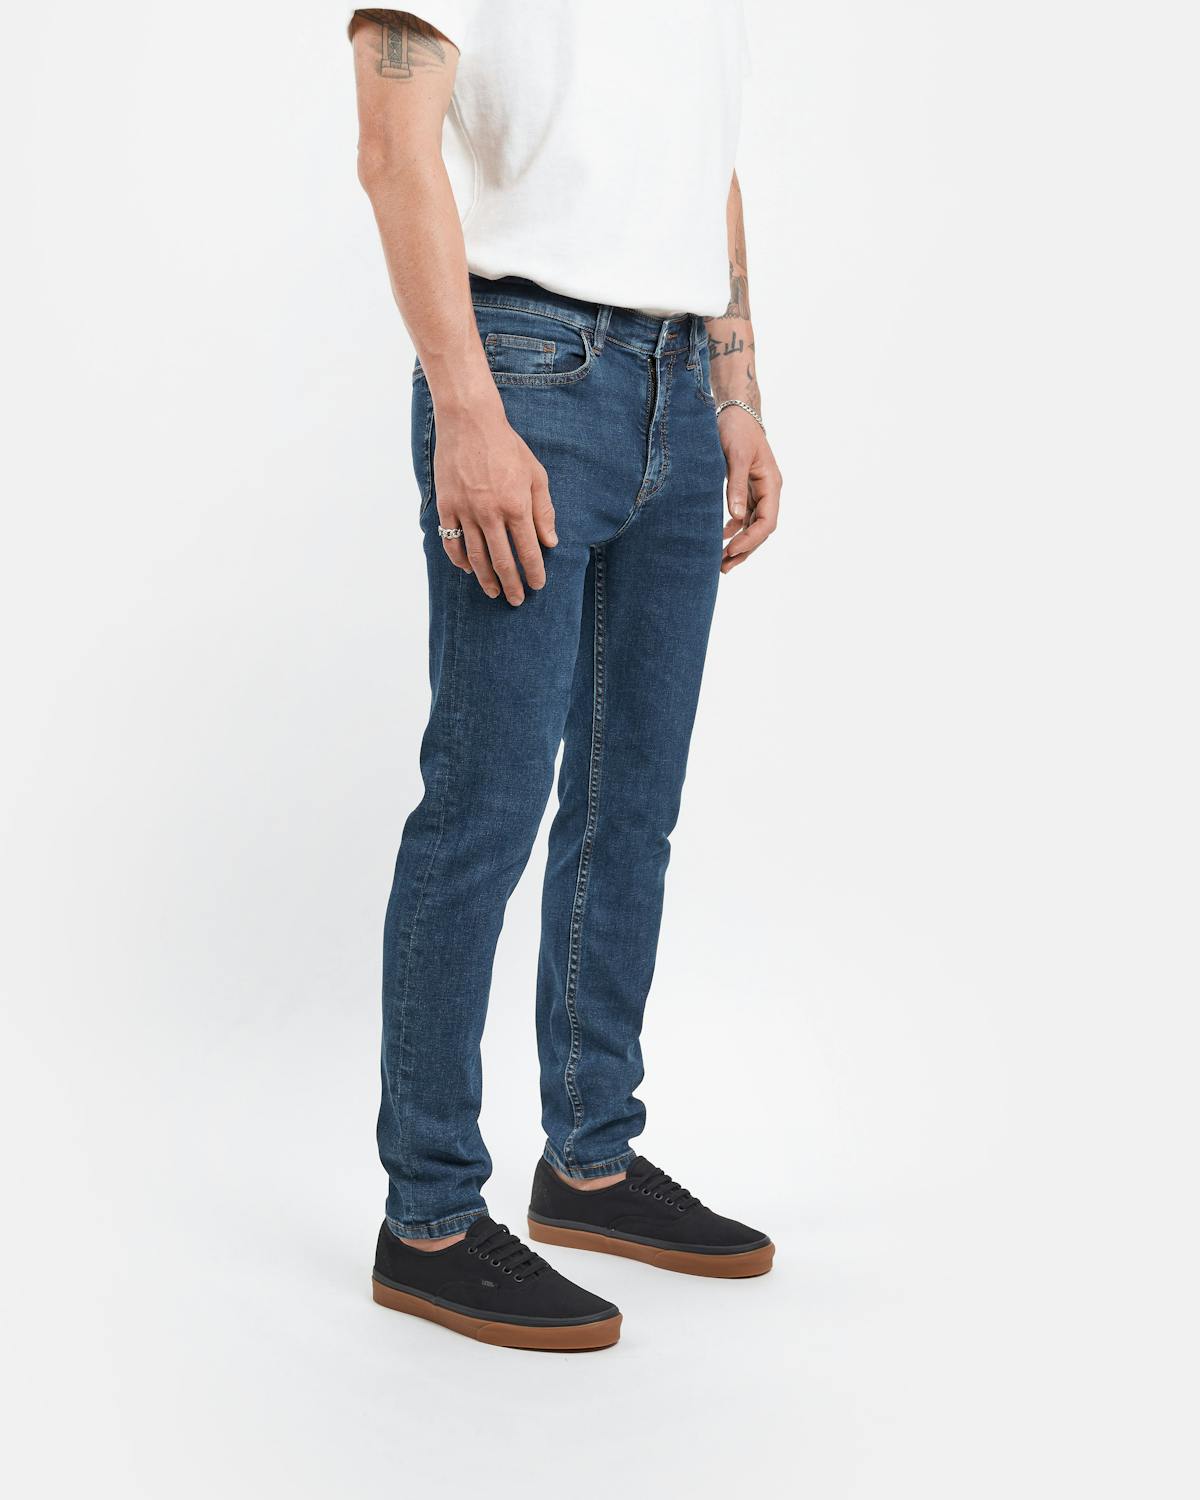 slim fit jeans in mid blue - unspun custom made denim jeans